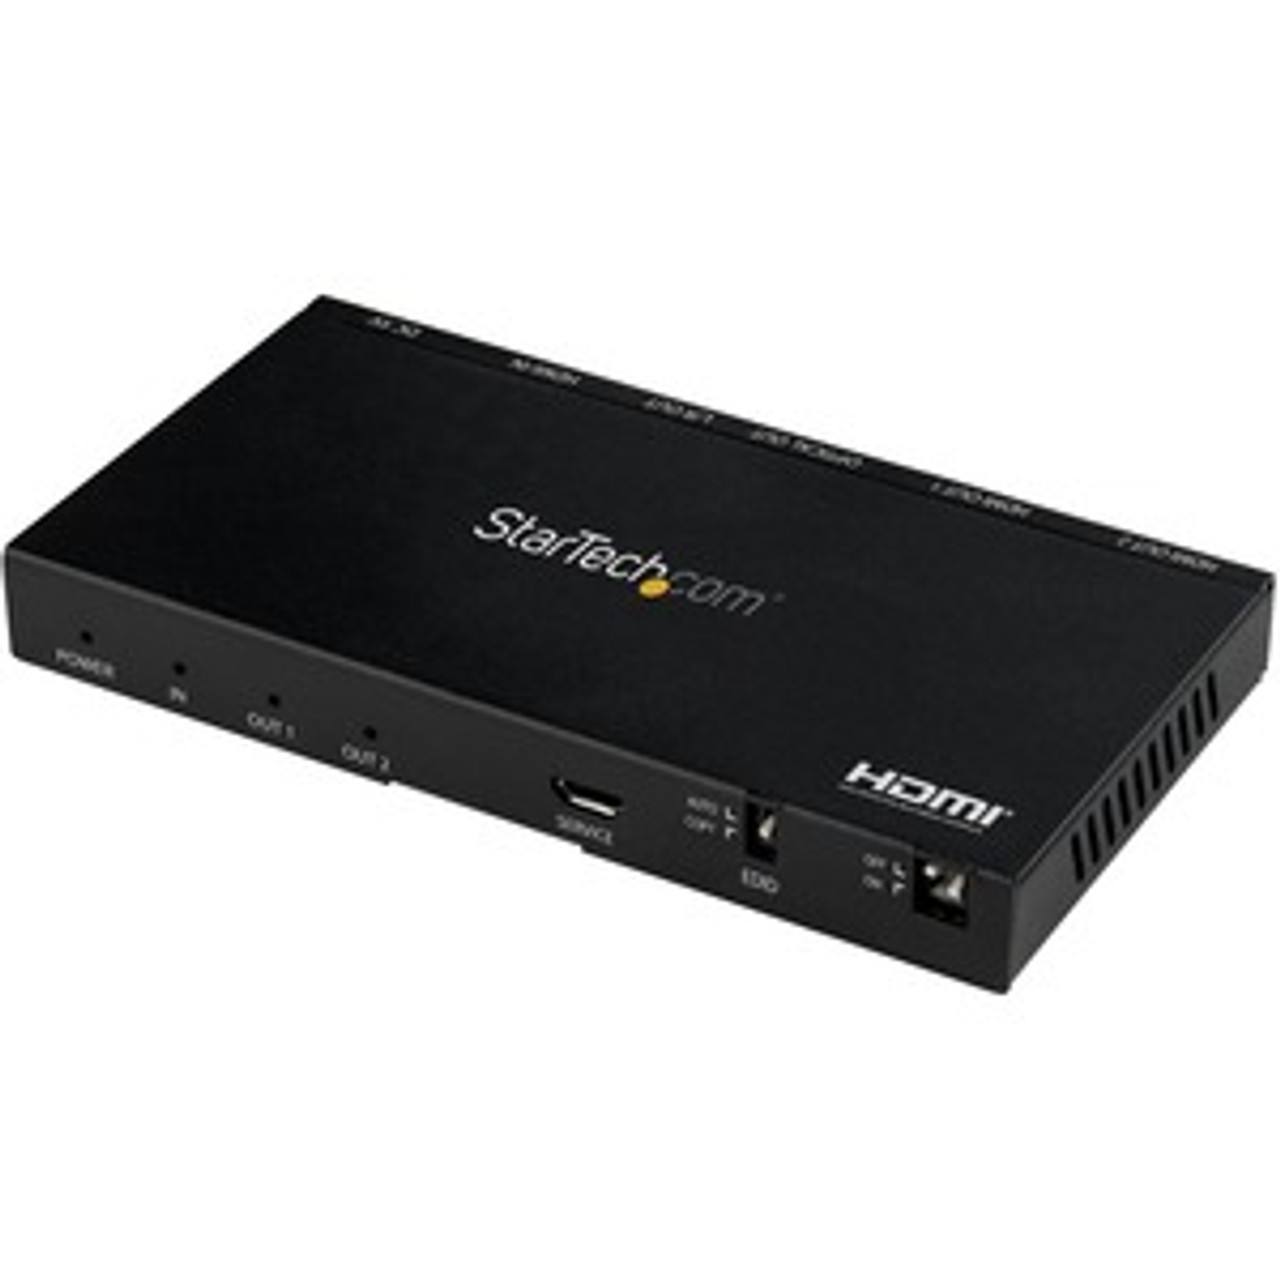 ST122HD20S StarTech 2-Port HDMI Splitter - 4K 60Hz with Built-In Scaler